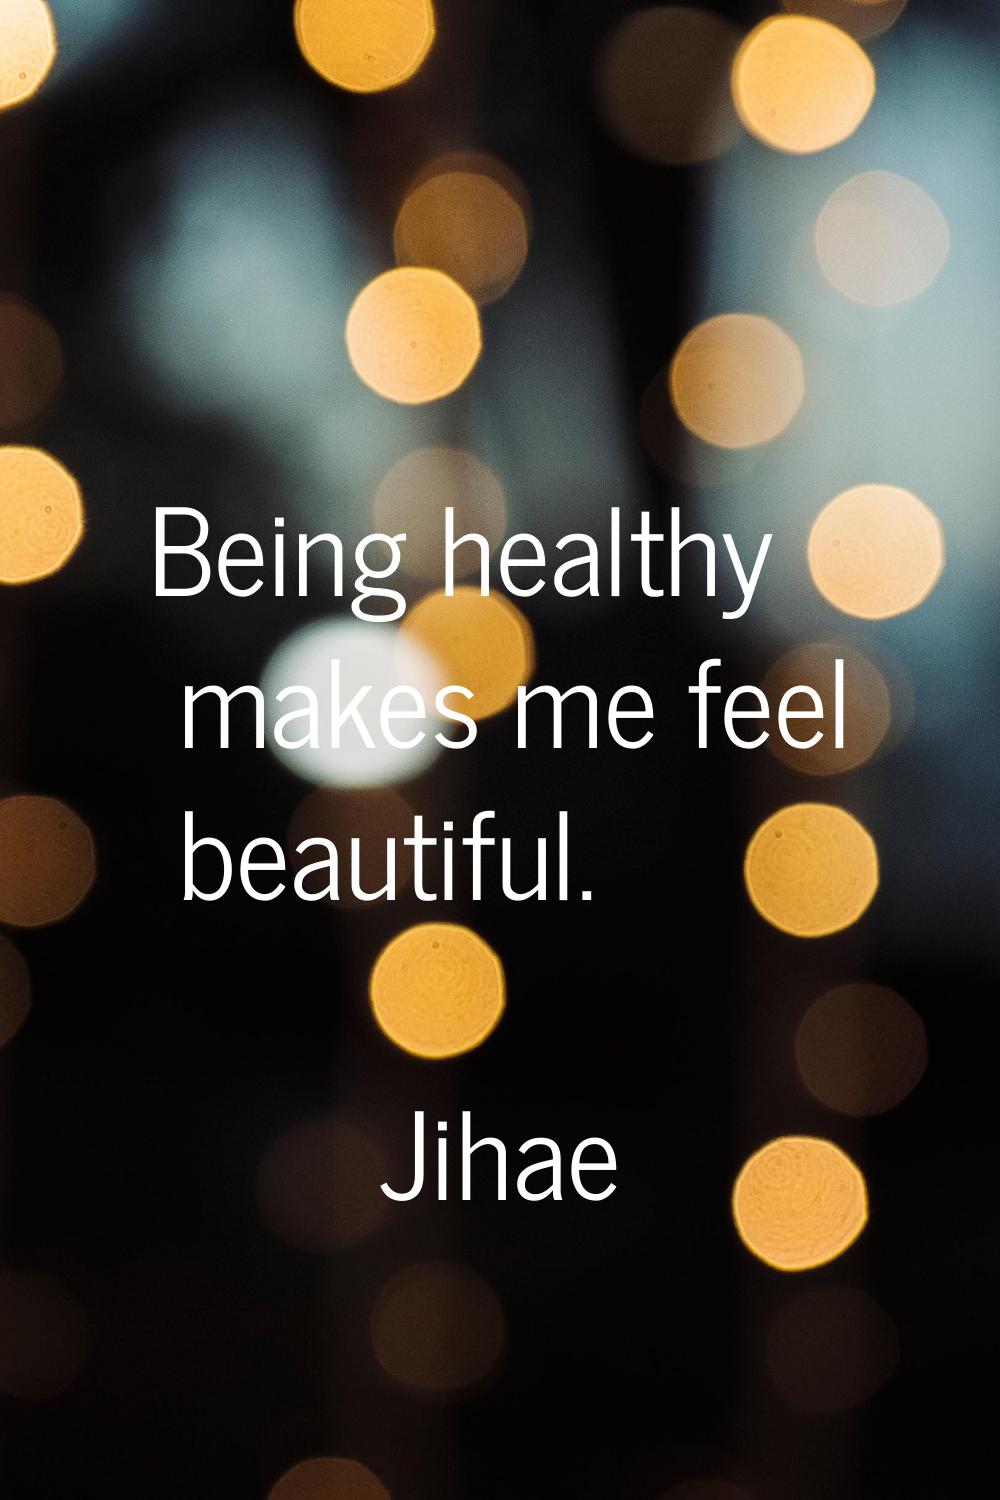 Being healthy makes me feel beautiful.